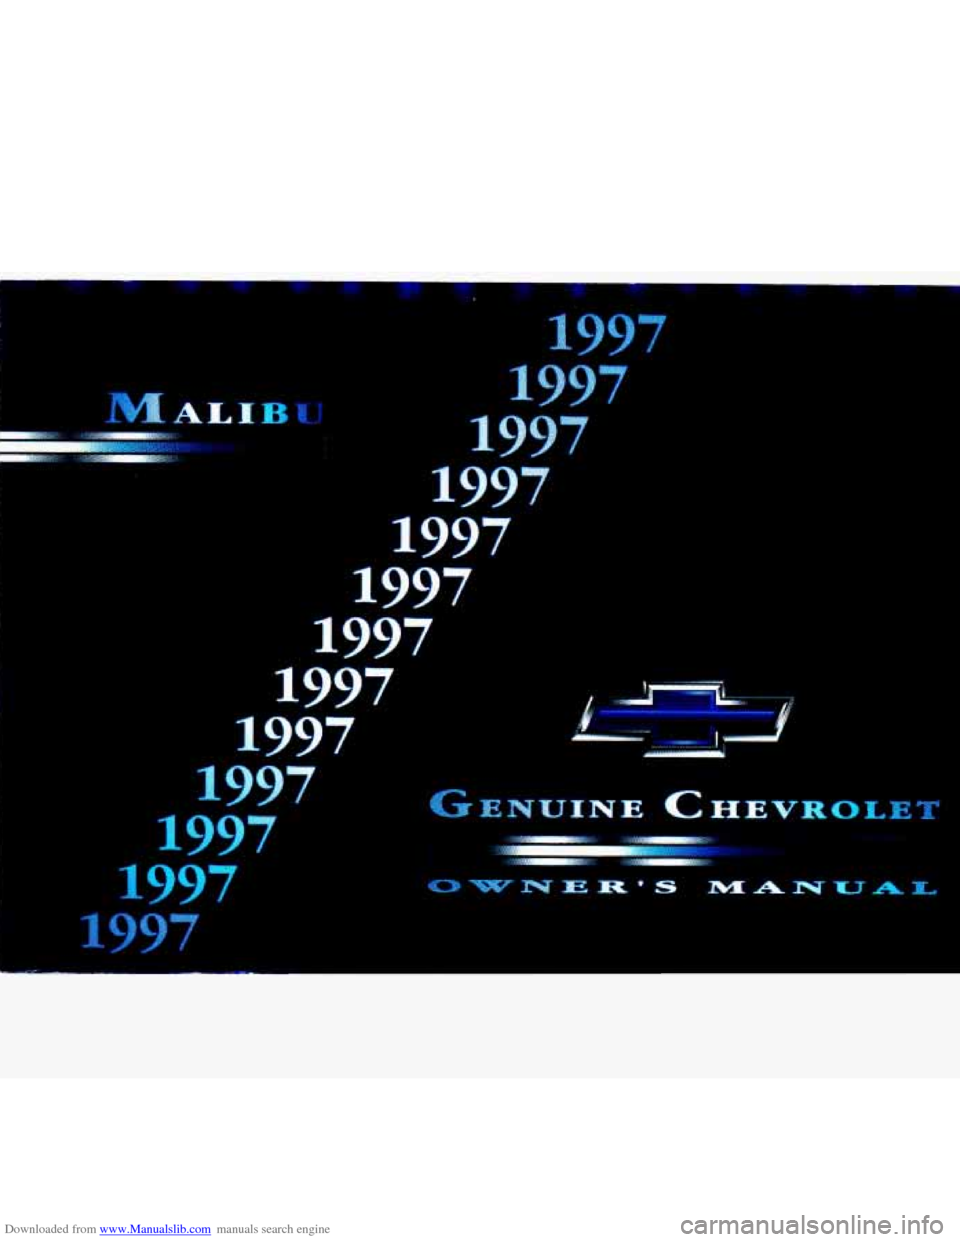 CHEVROLET MALIBU 1997 5.G Owners Manual Downloaded from www.Manualslib.com manuals search engine  c 
-1 
1997 
1997 
1997 
1997 
1997 
997 
1997 
1, 997 
I 
---UI UE c HEVROLE 
-7 E   